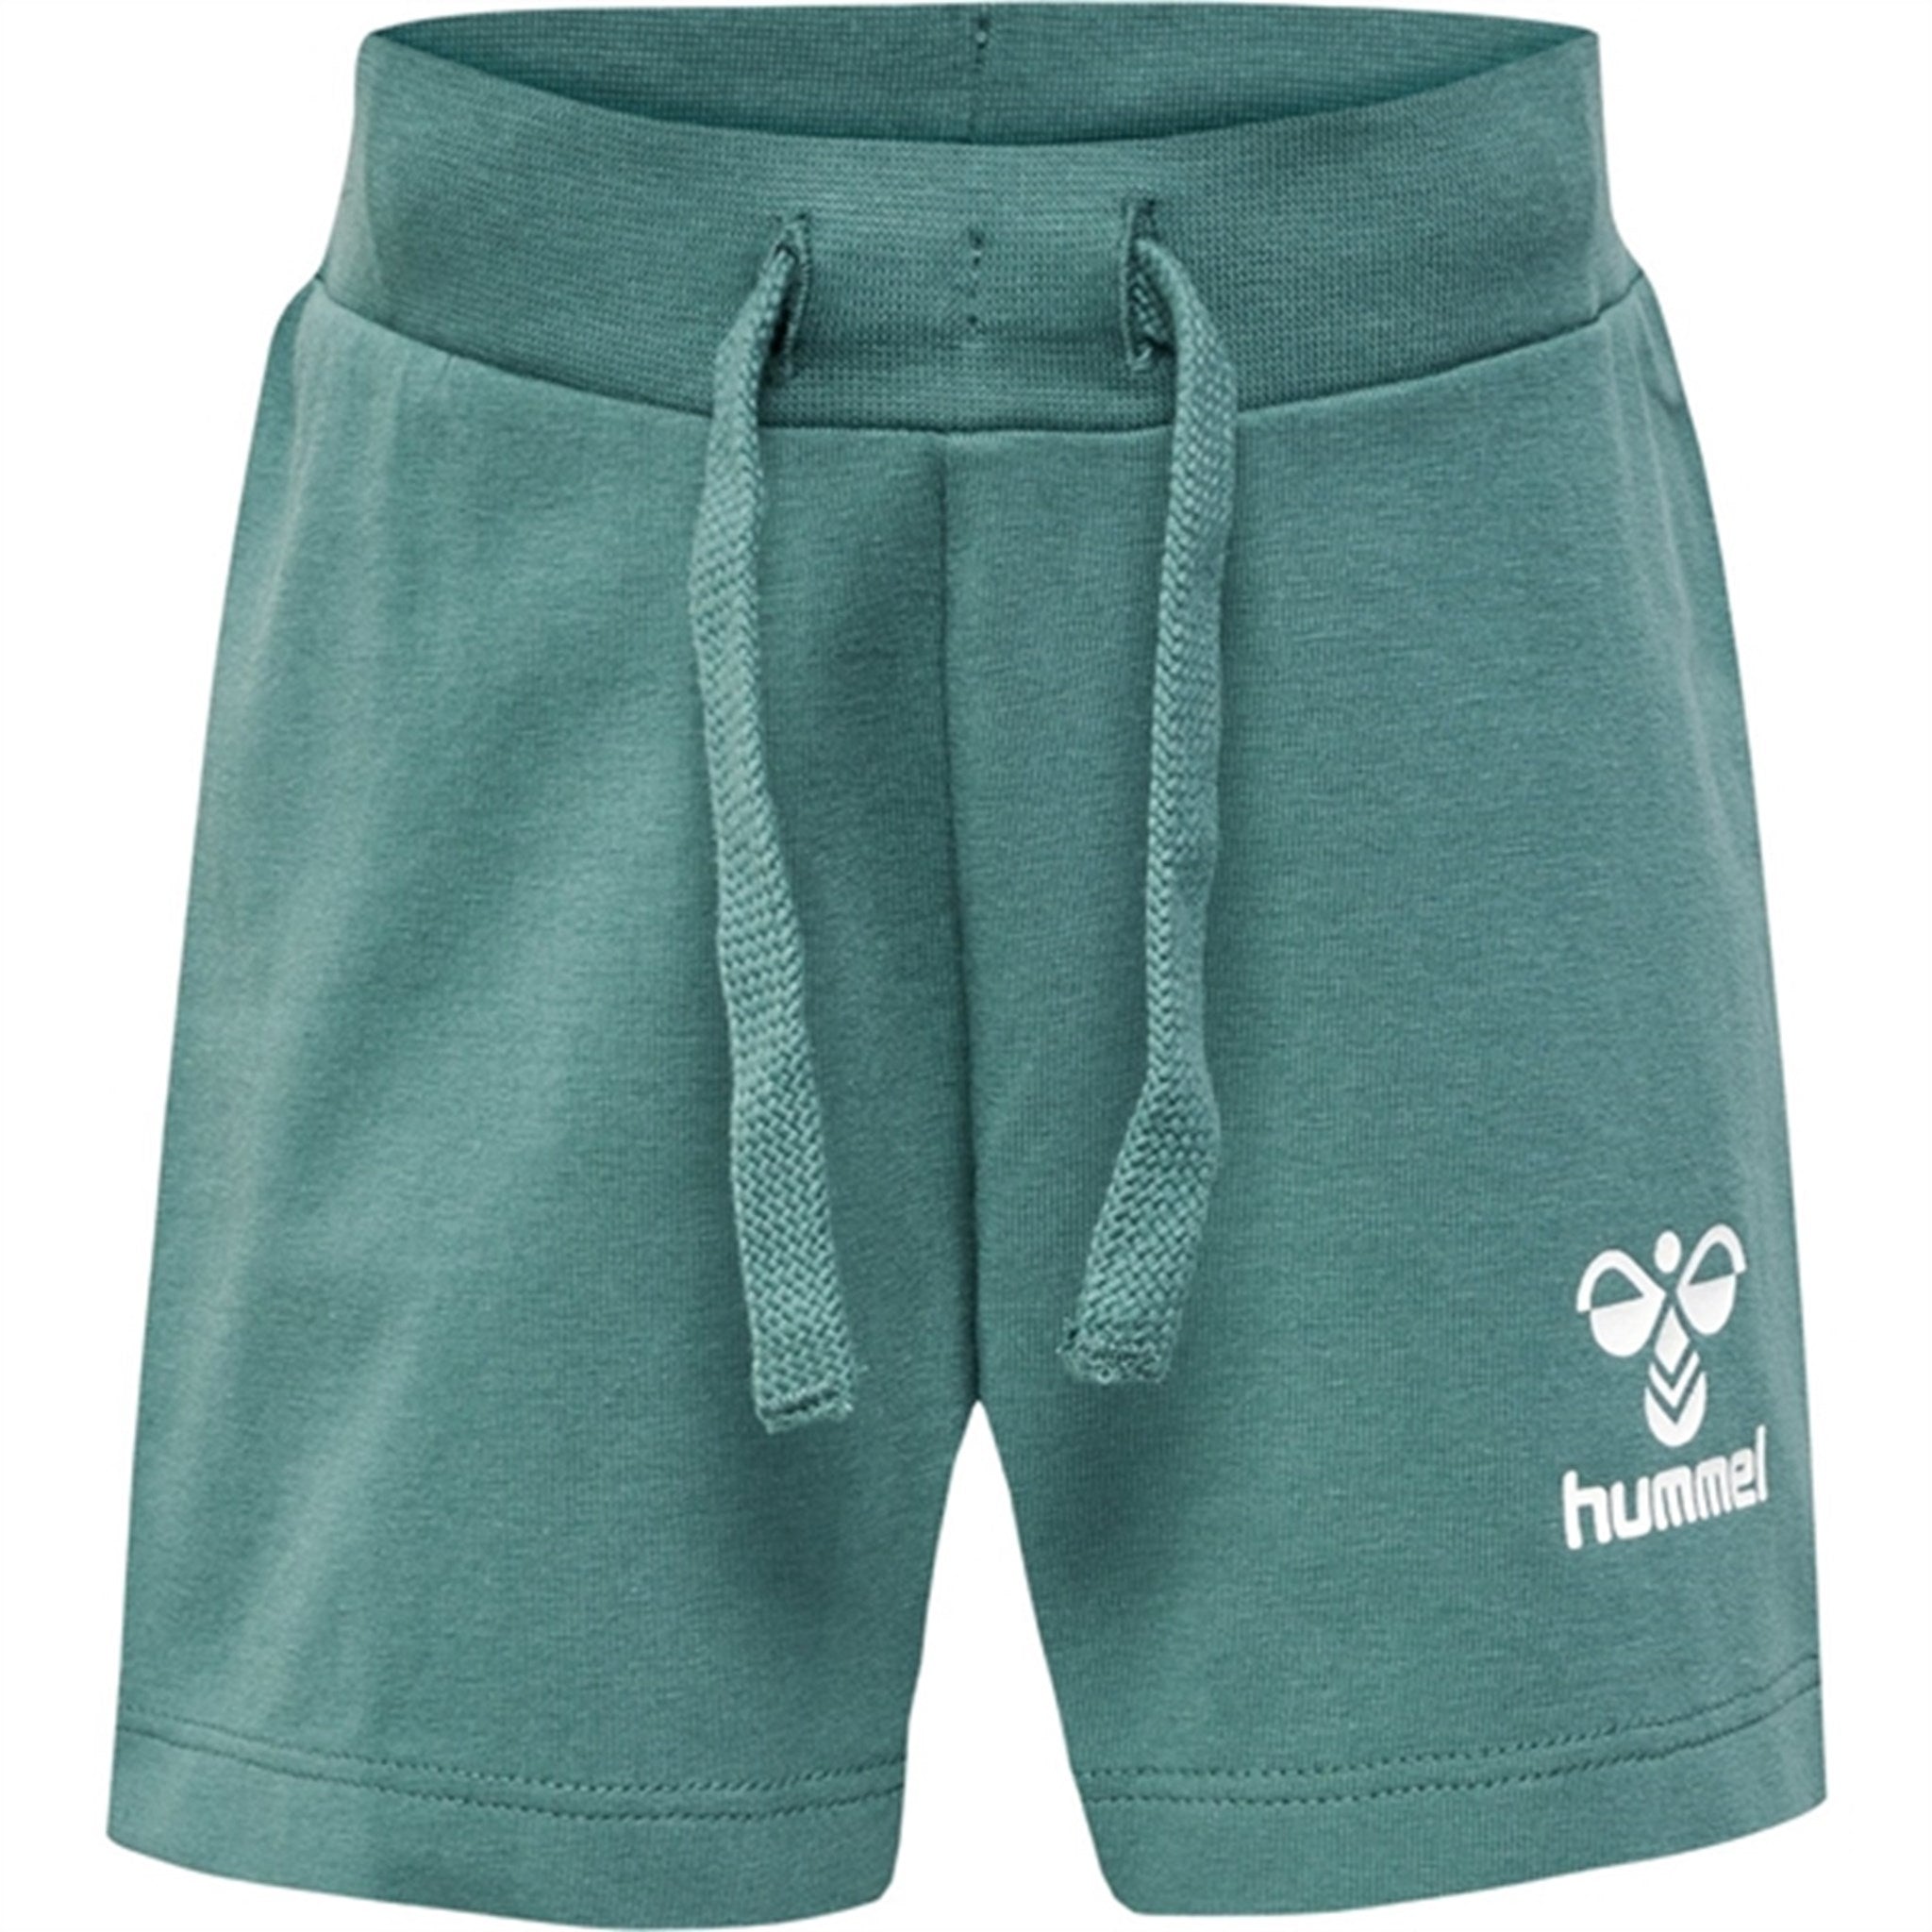 Hummel Sea Pine Azur Shorts